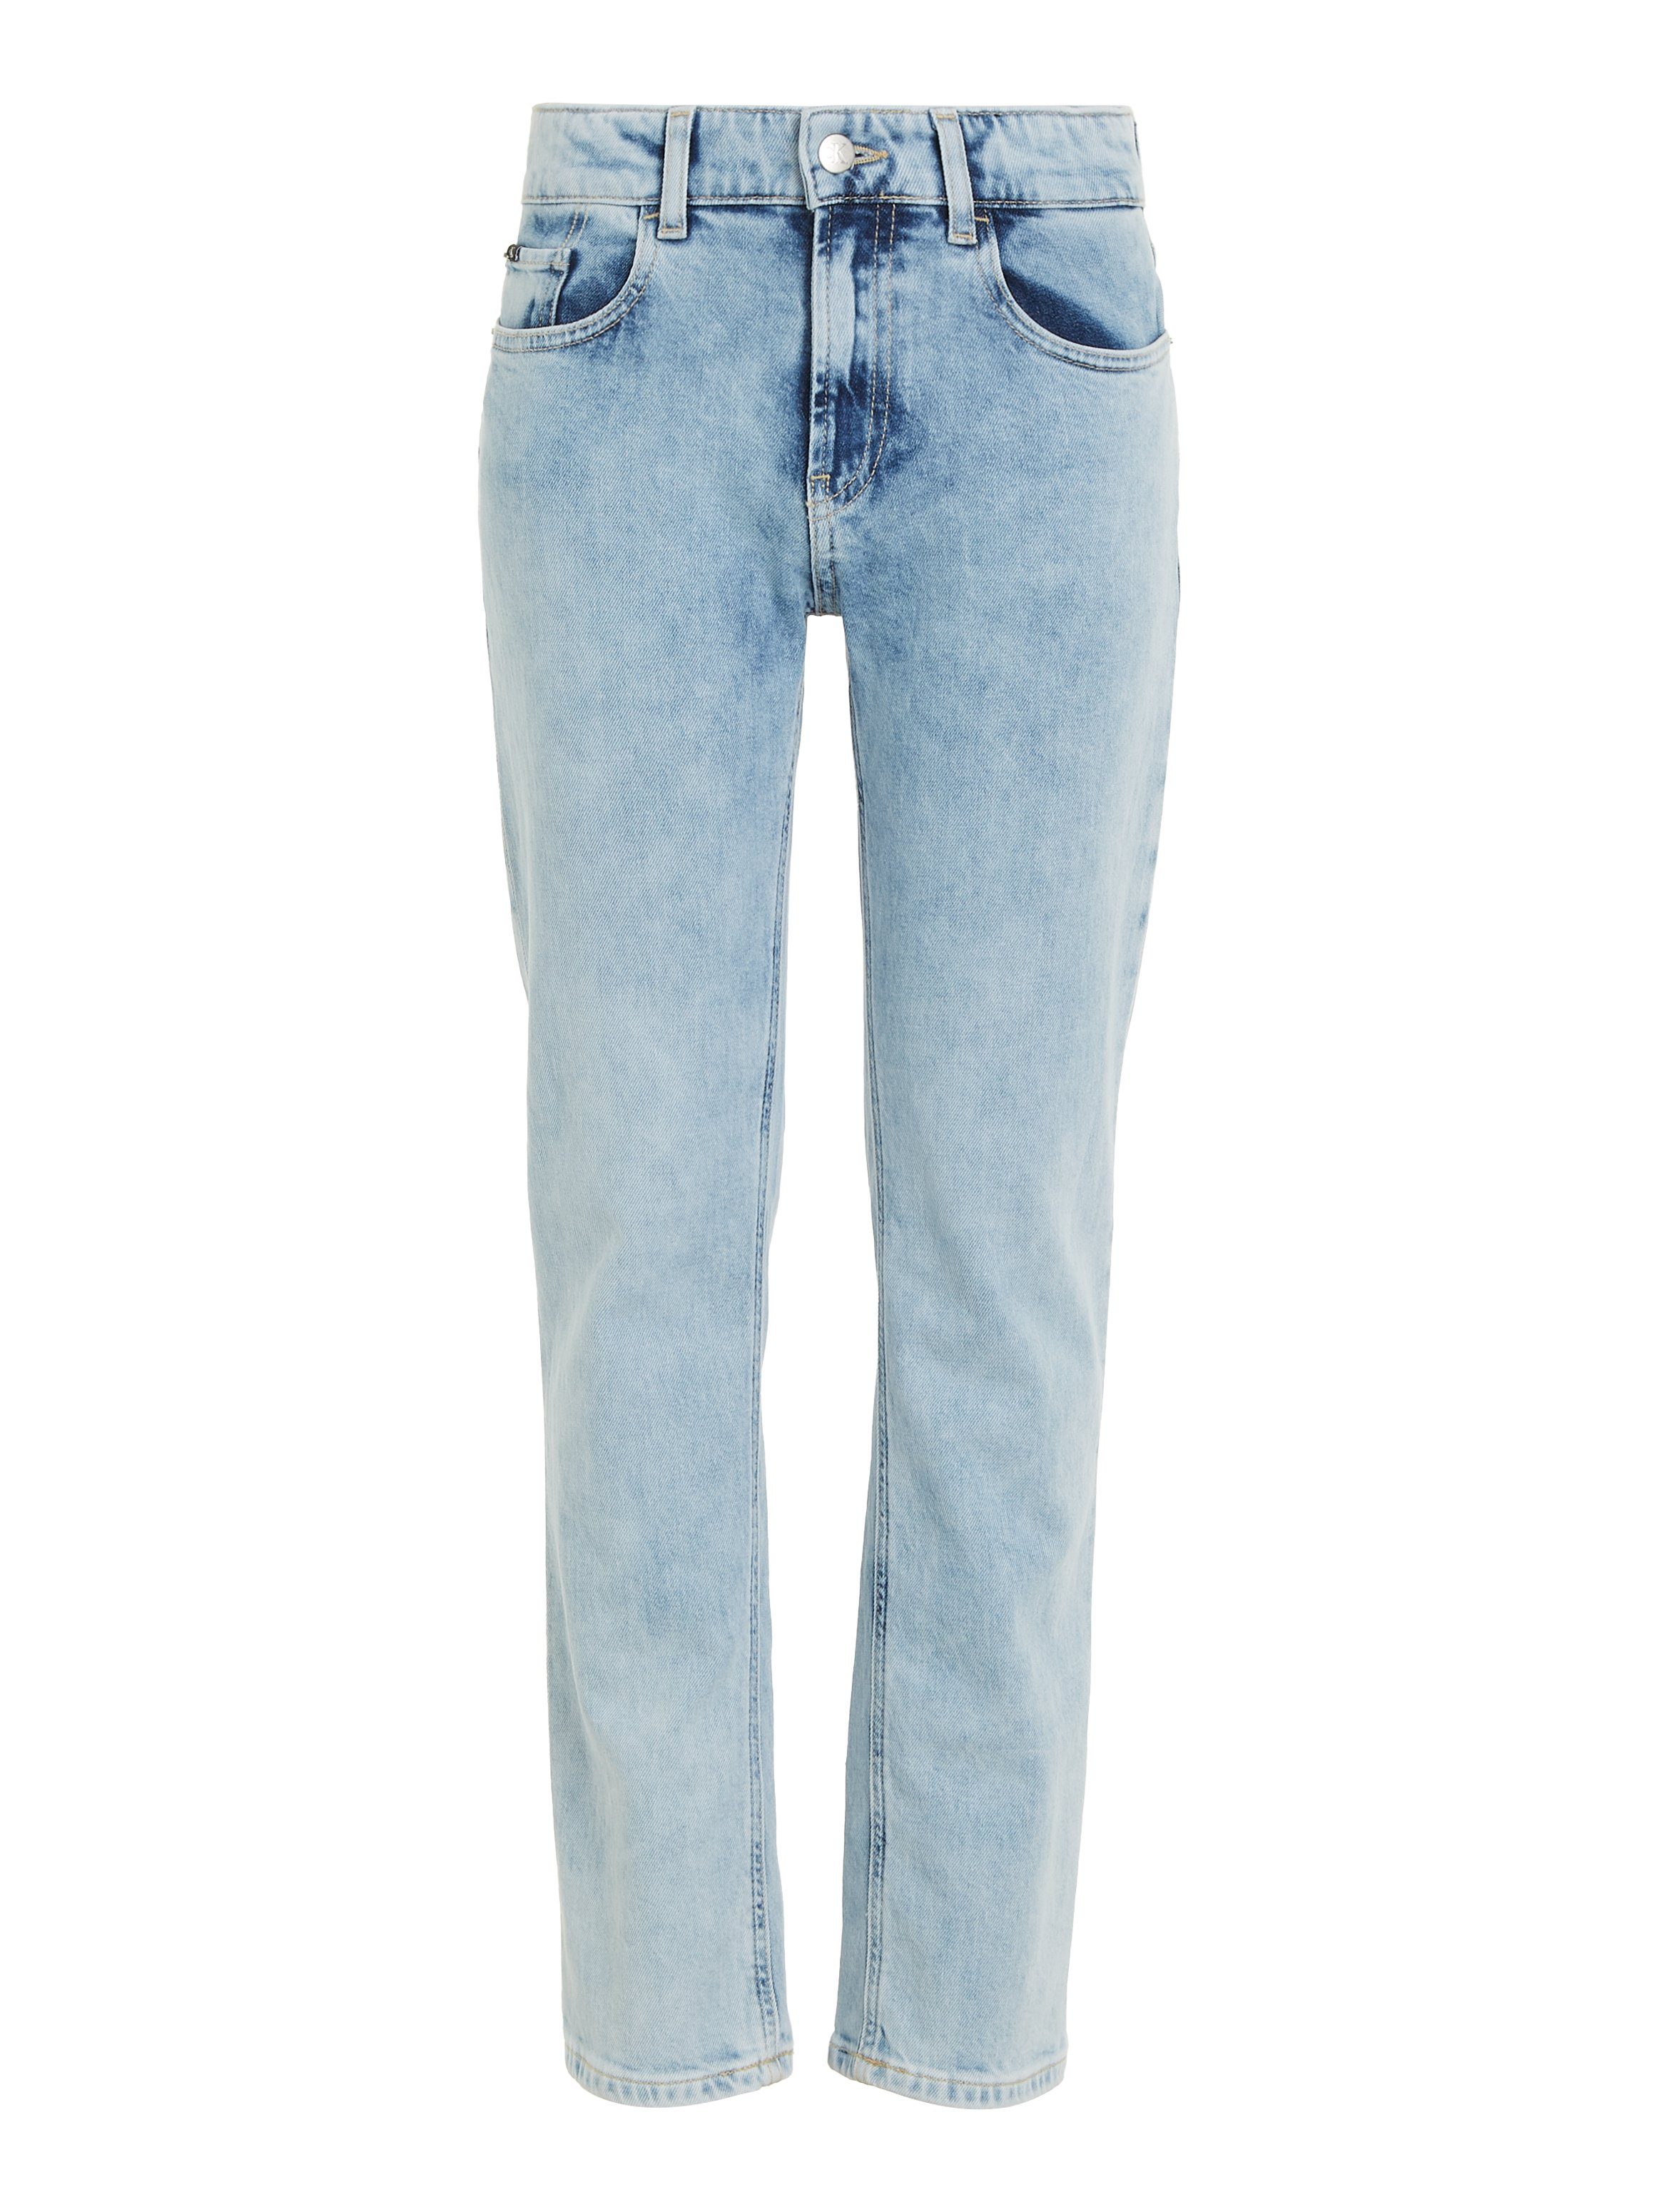 Calvin Klein Straight-Jeans 5-Poket-Style OPTIC Jeans BLUE LIGHT STRAIGHT REG. im